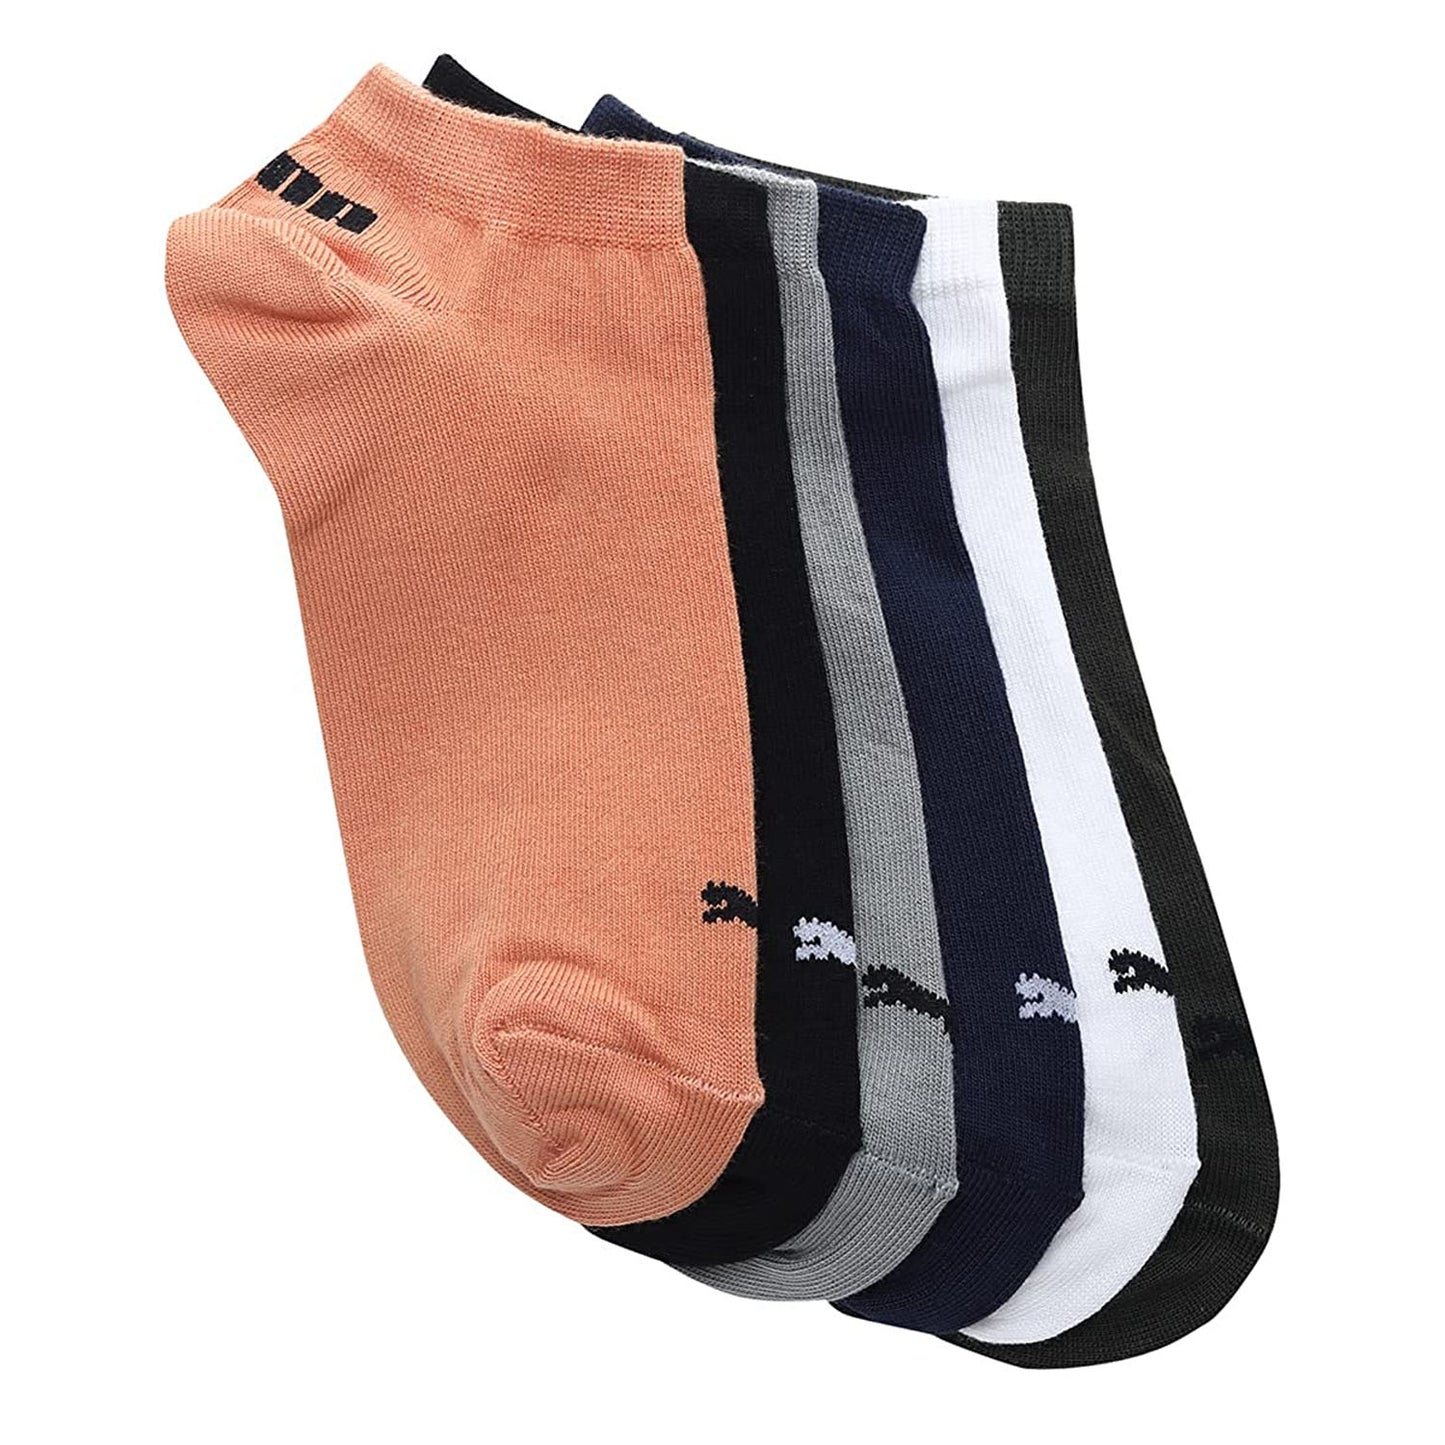 Puma Sneaker Soft Cotton Socks, 6 Pairs, Black/Beige - Best Price online Prokicksports.com